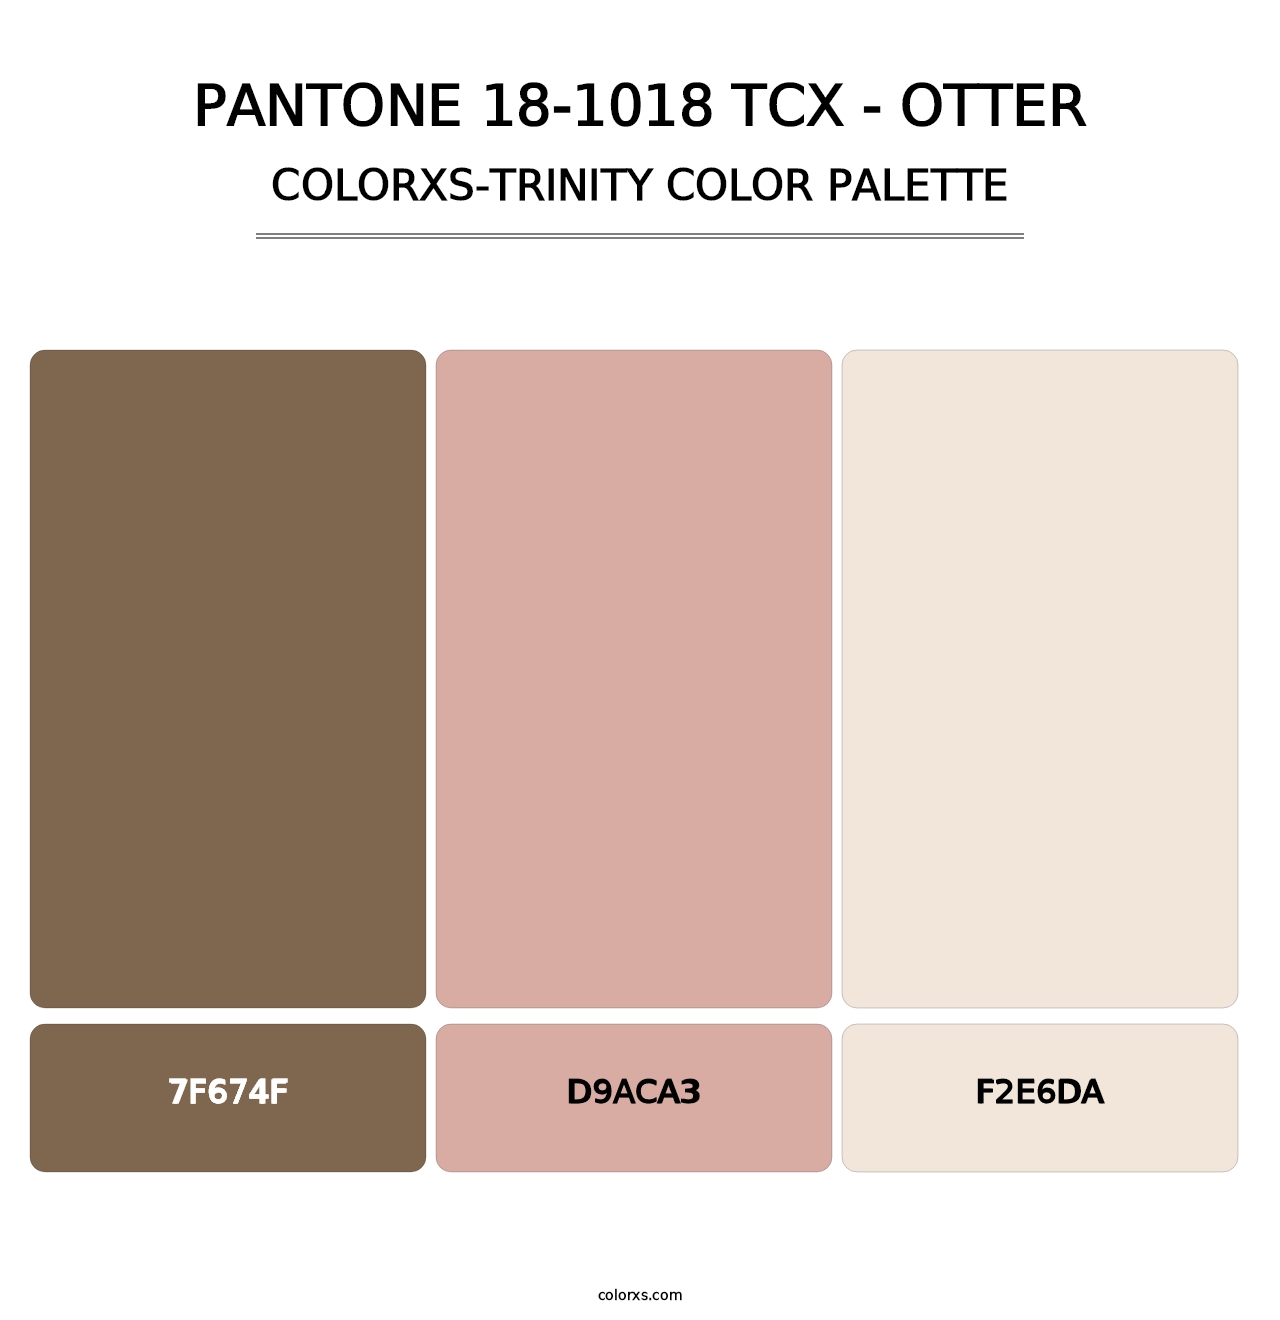 PANTONE 18-1018 TCX - Otter - Colorxs Trinity Palette